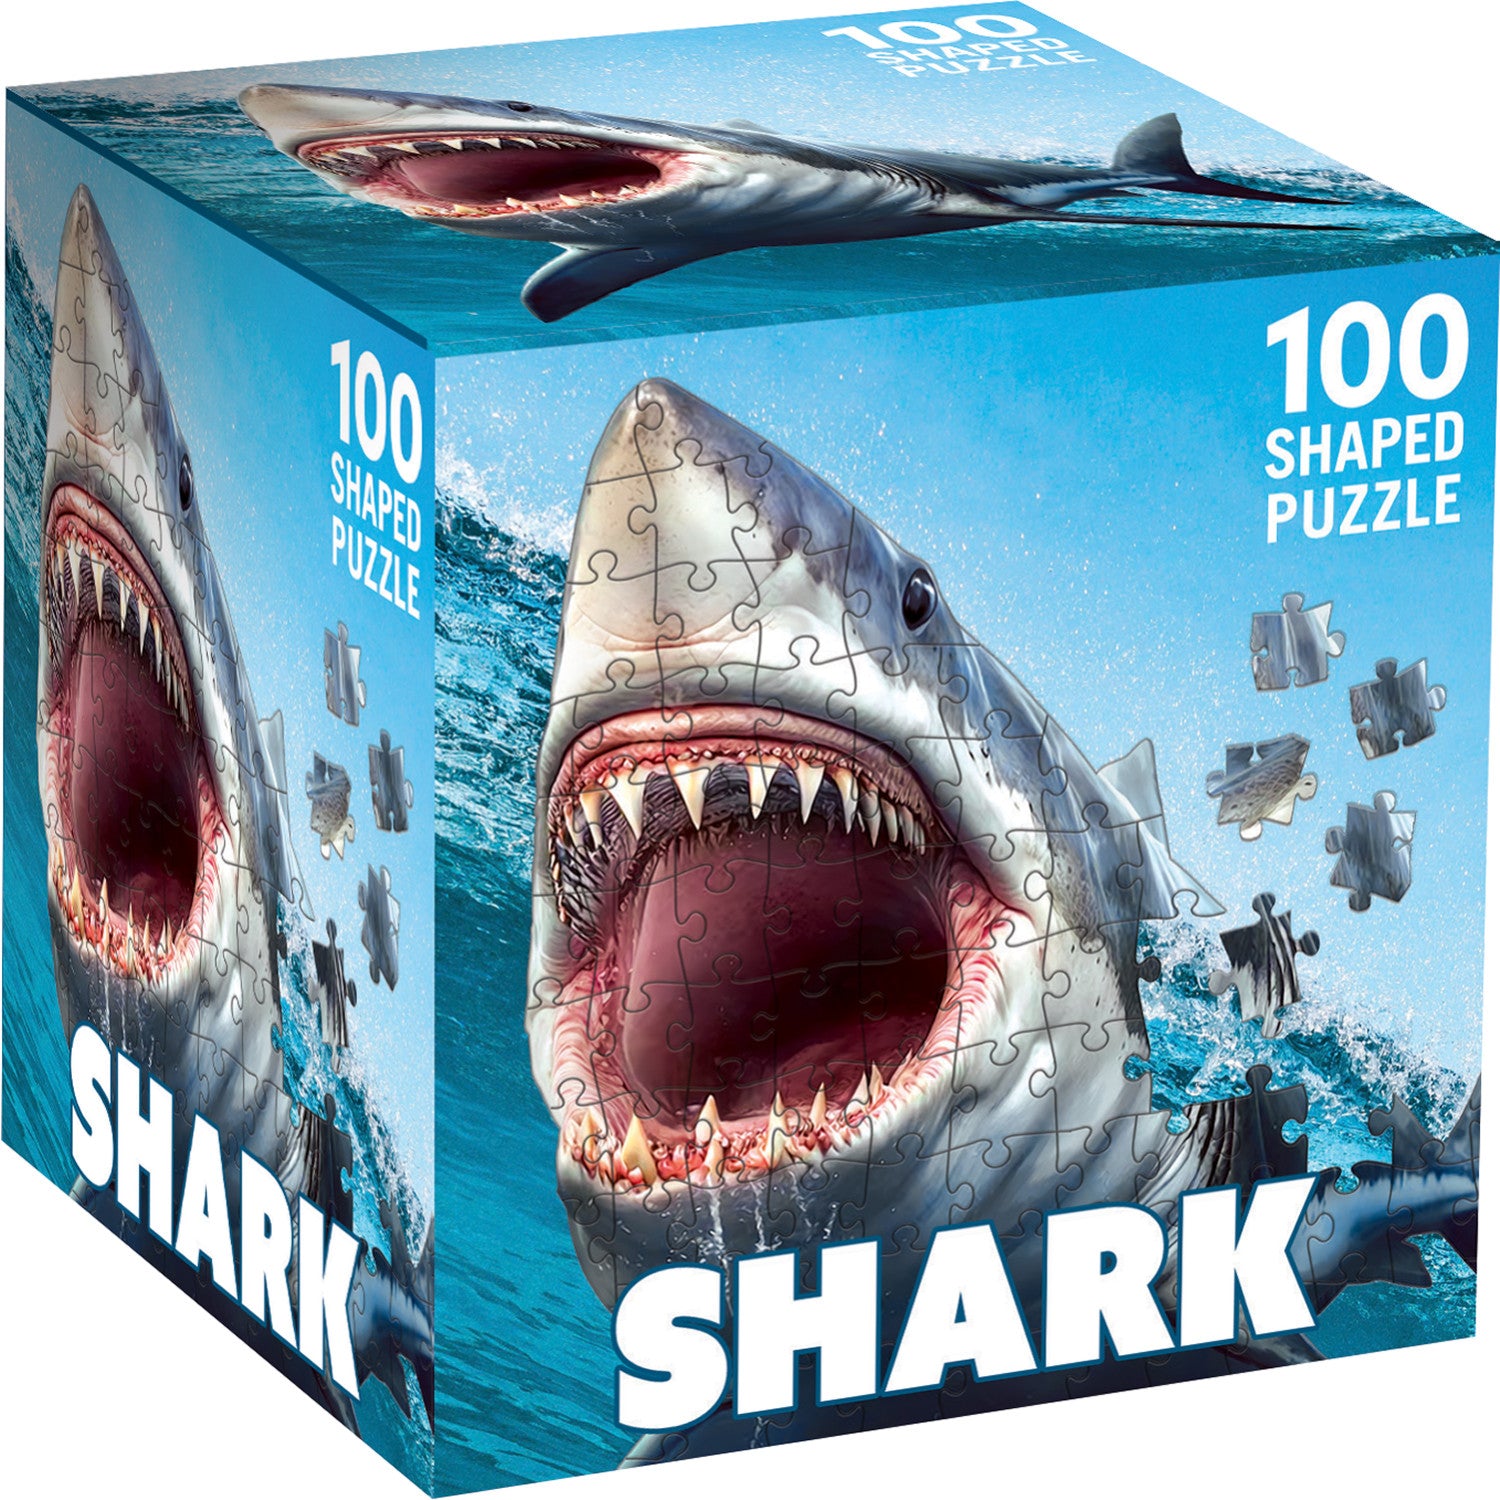 Shark 100 Piece Shaped Jigsaw Puzzle